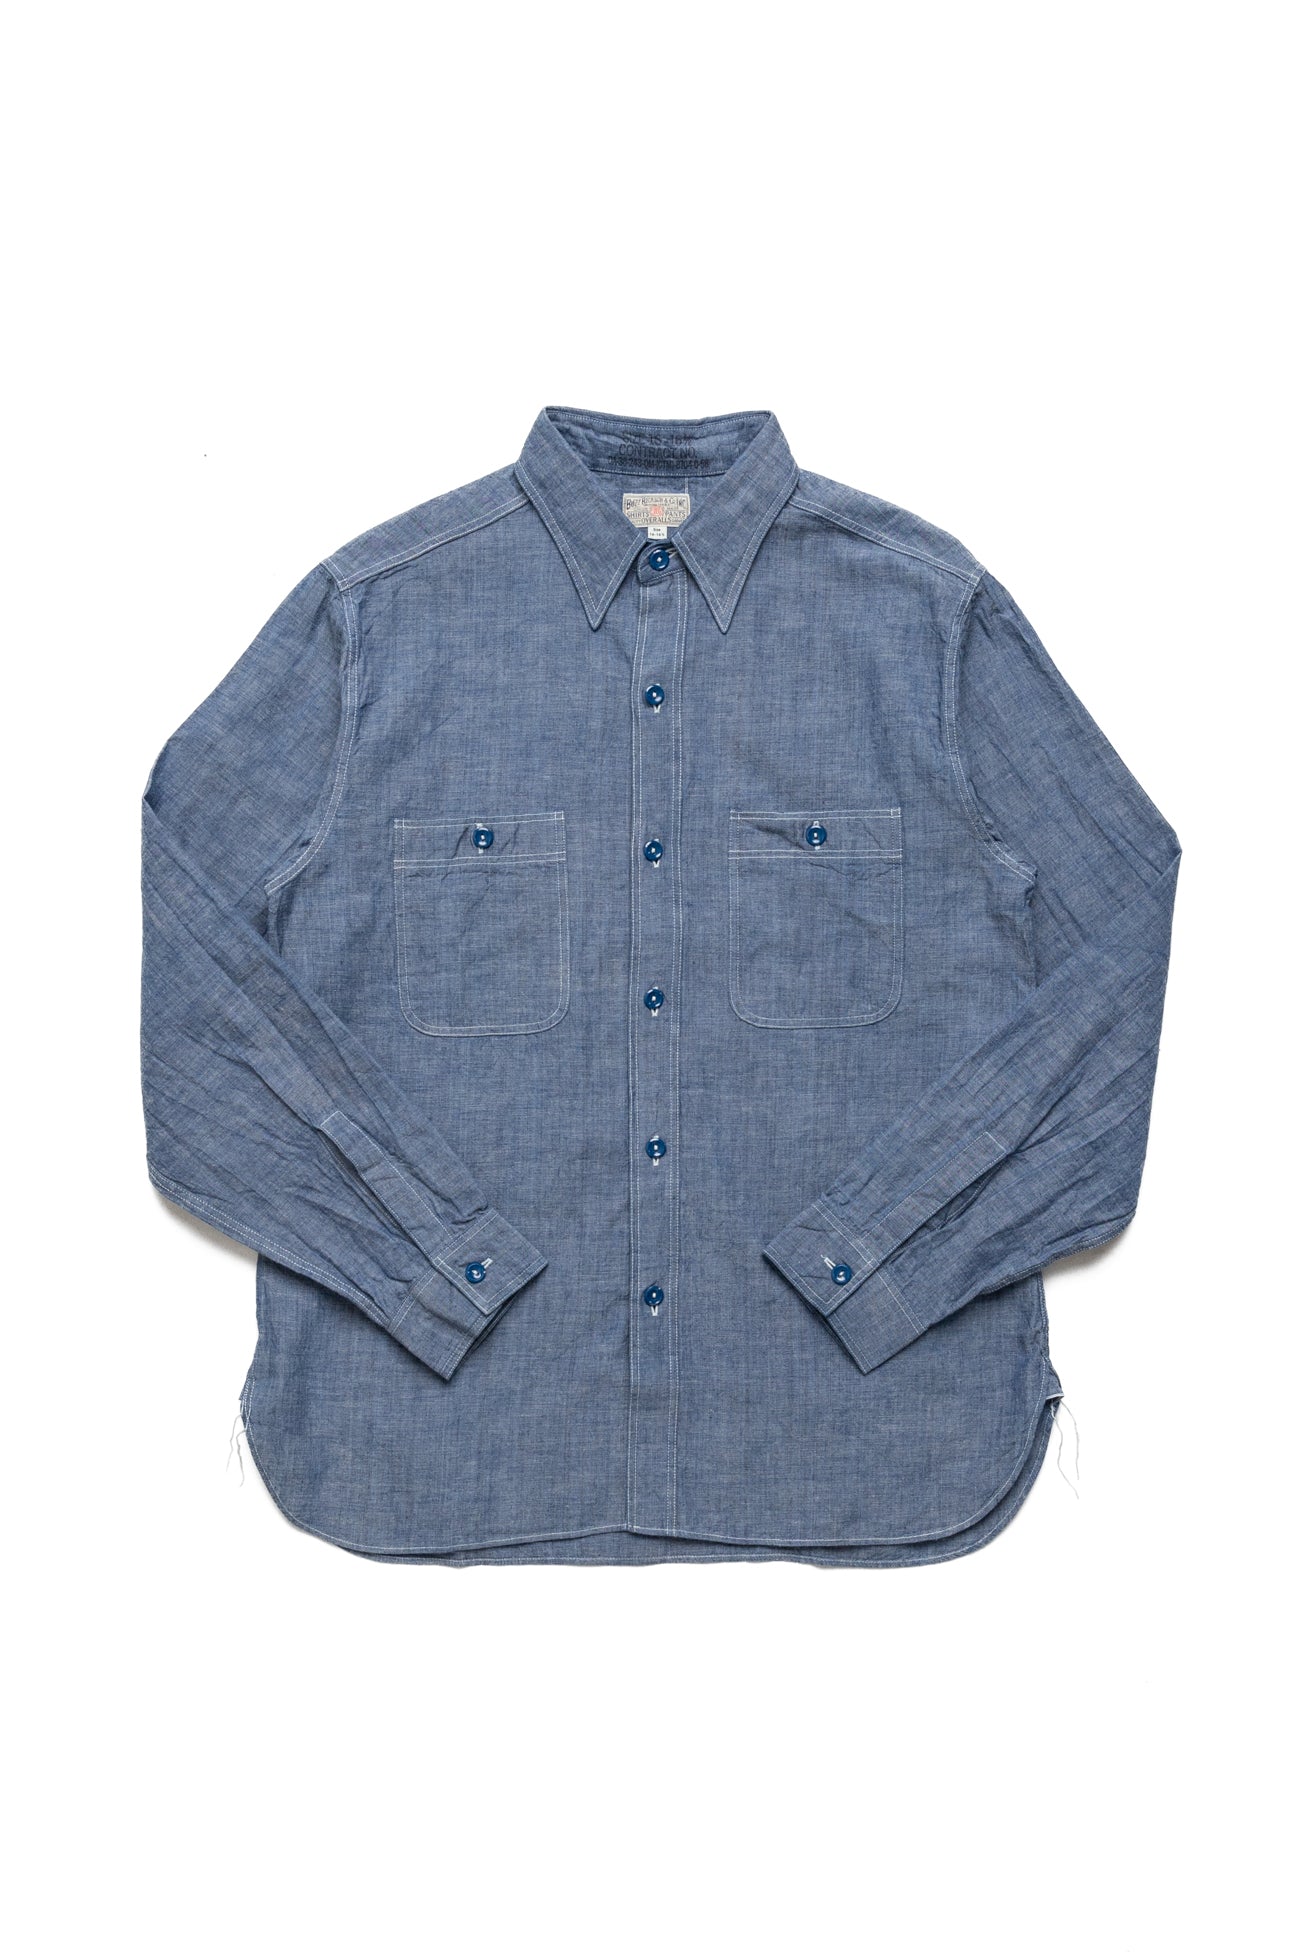 Buzz Rickson's Blue Chambray Work Shirt (Long Sleeve) – BLUE IN 